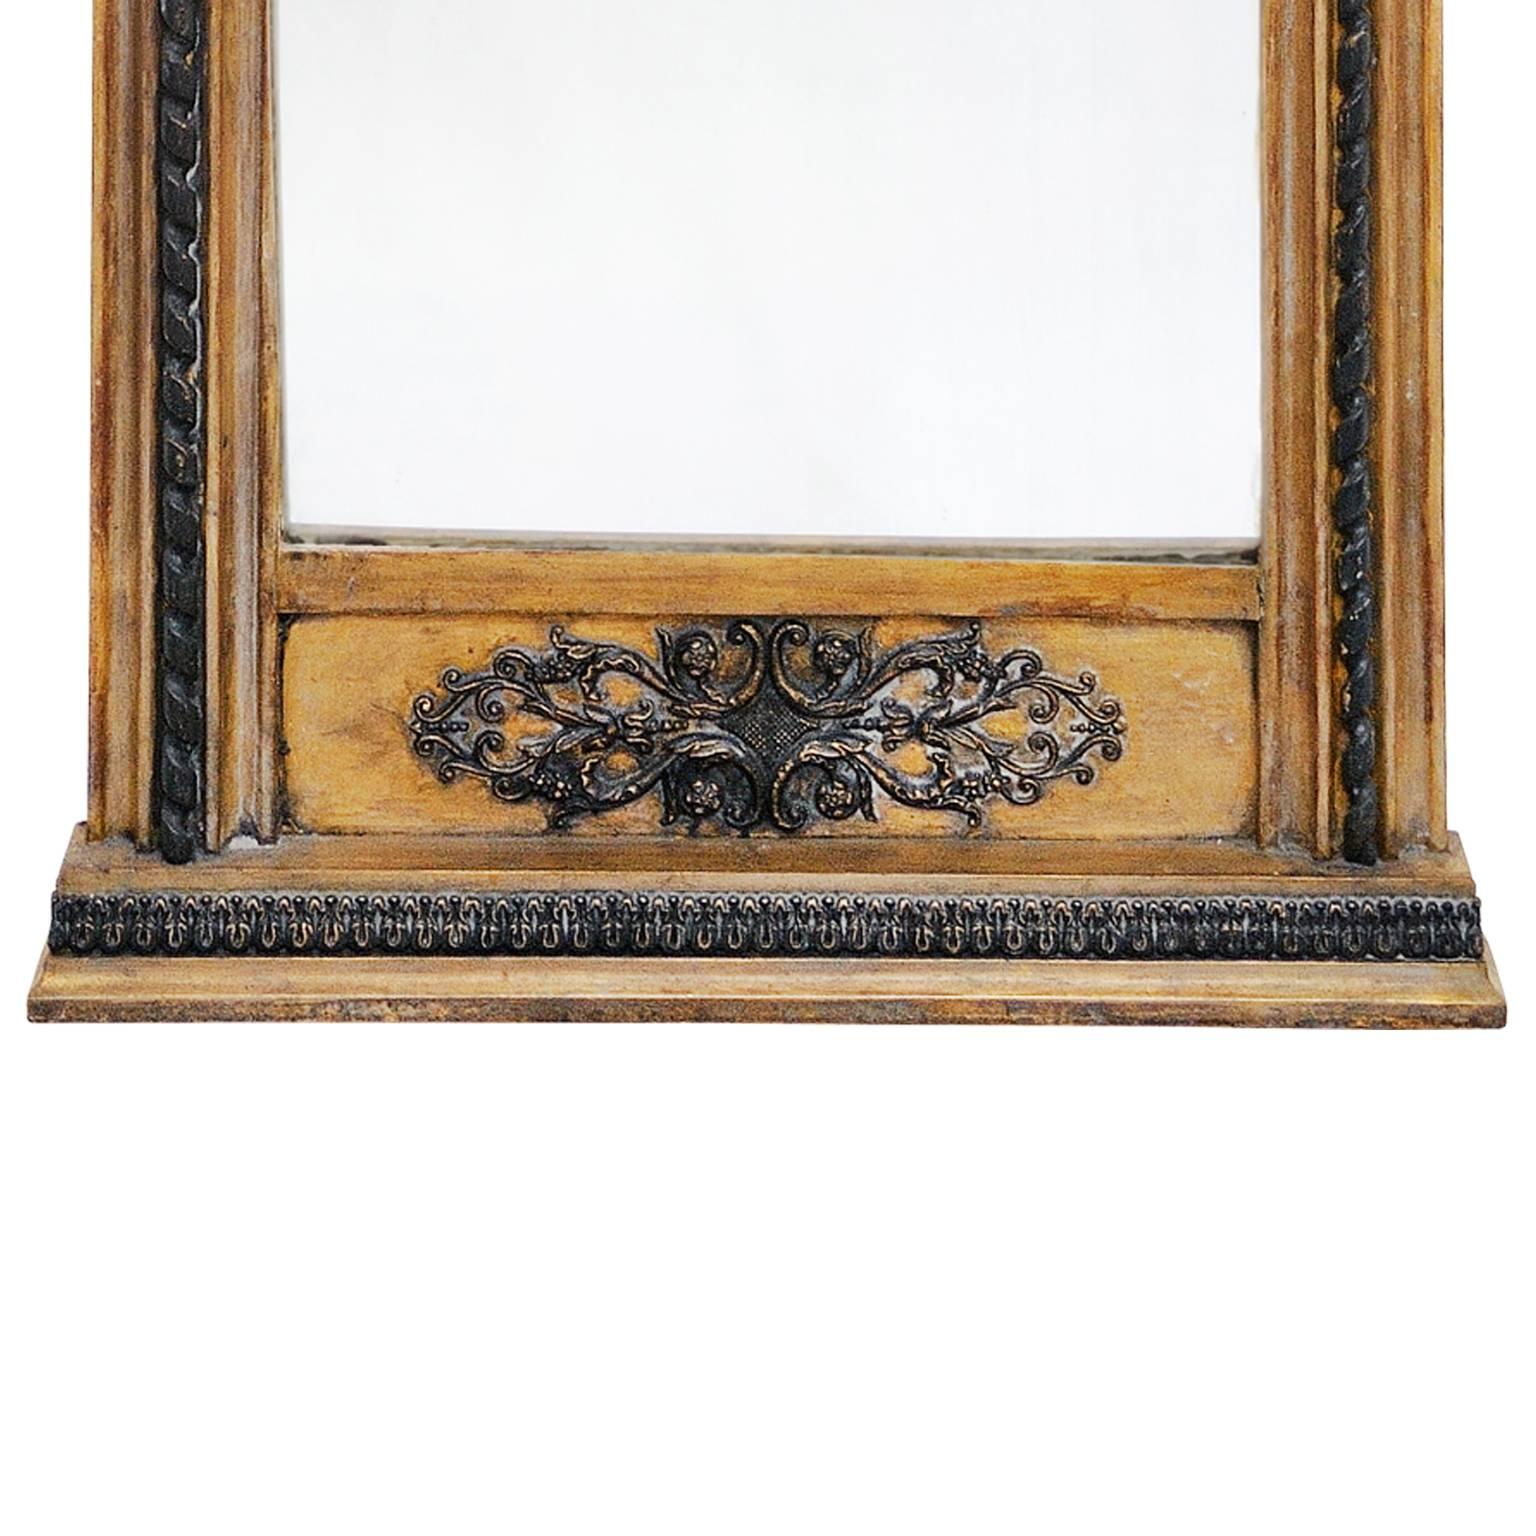 Glazed 19th Century Second Empire French Giltwood Pier Glass Mirror, circa 1860